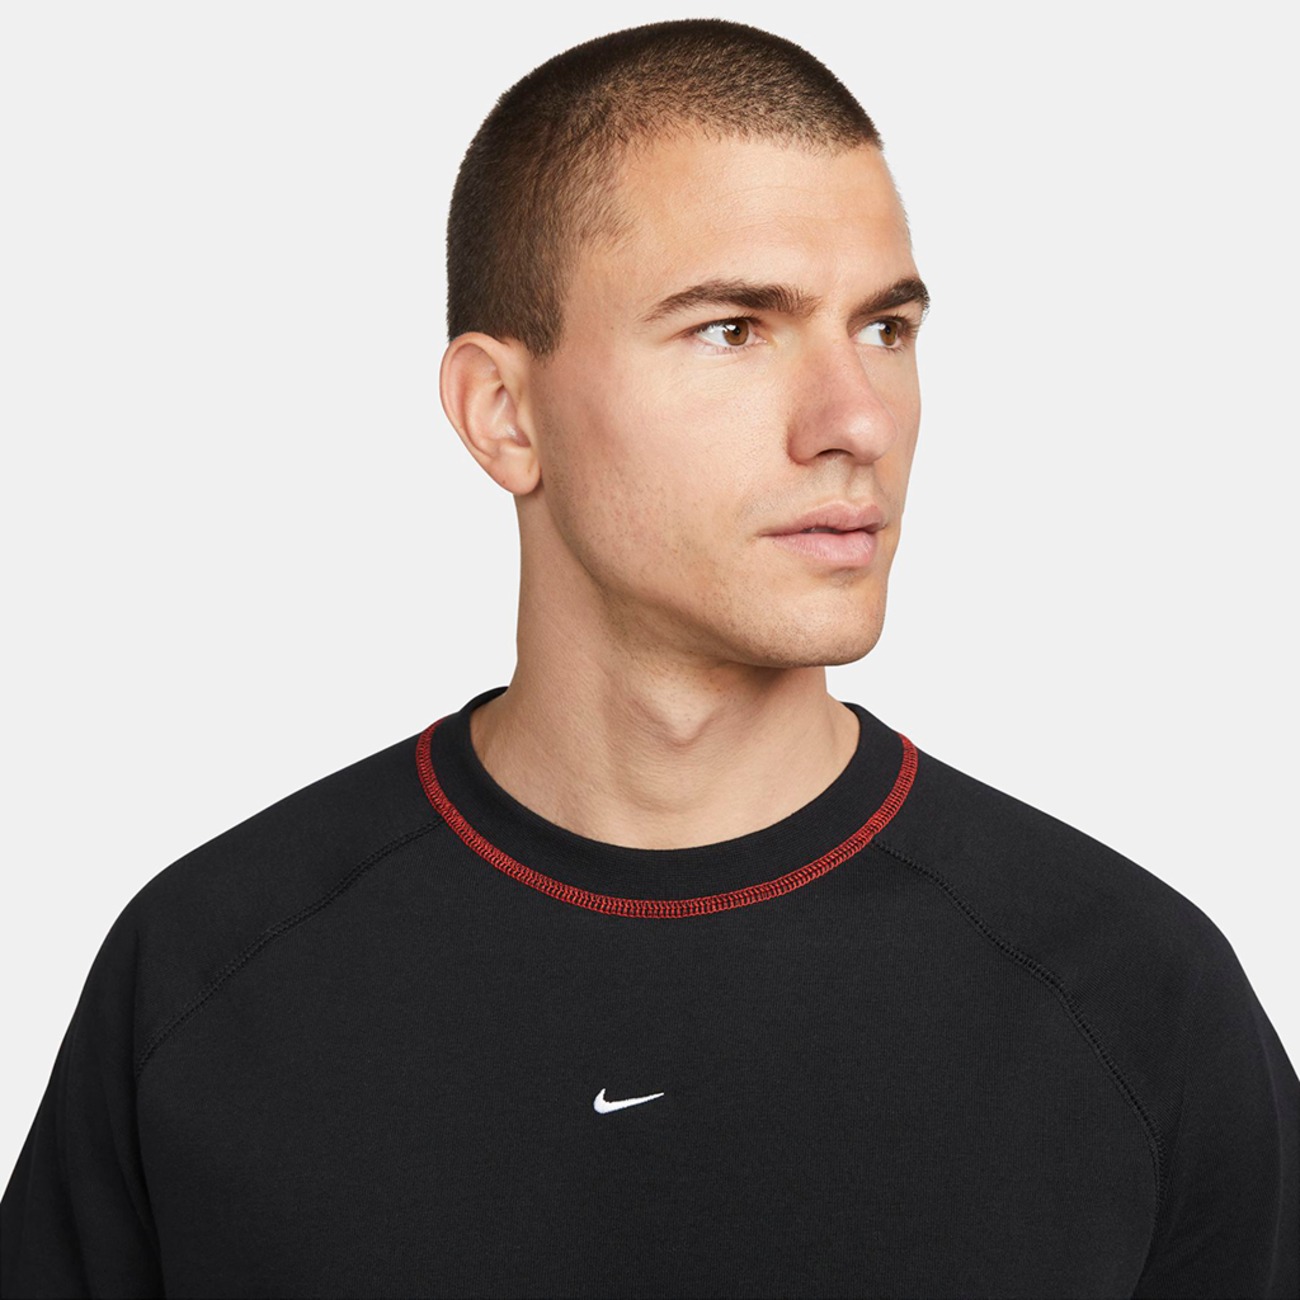 Camiseta Nike F.C. Tribuna Masculina - Foto 3